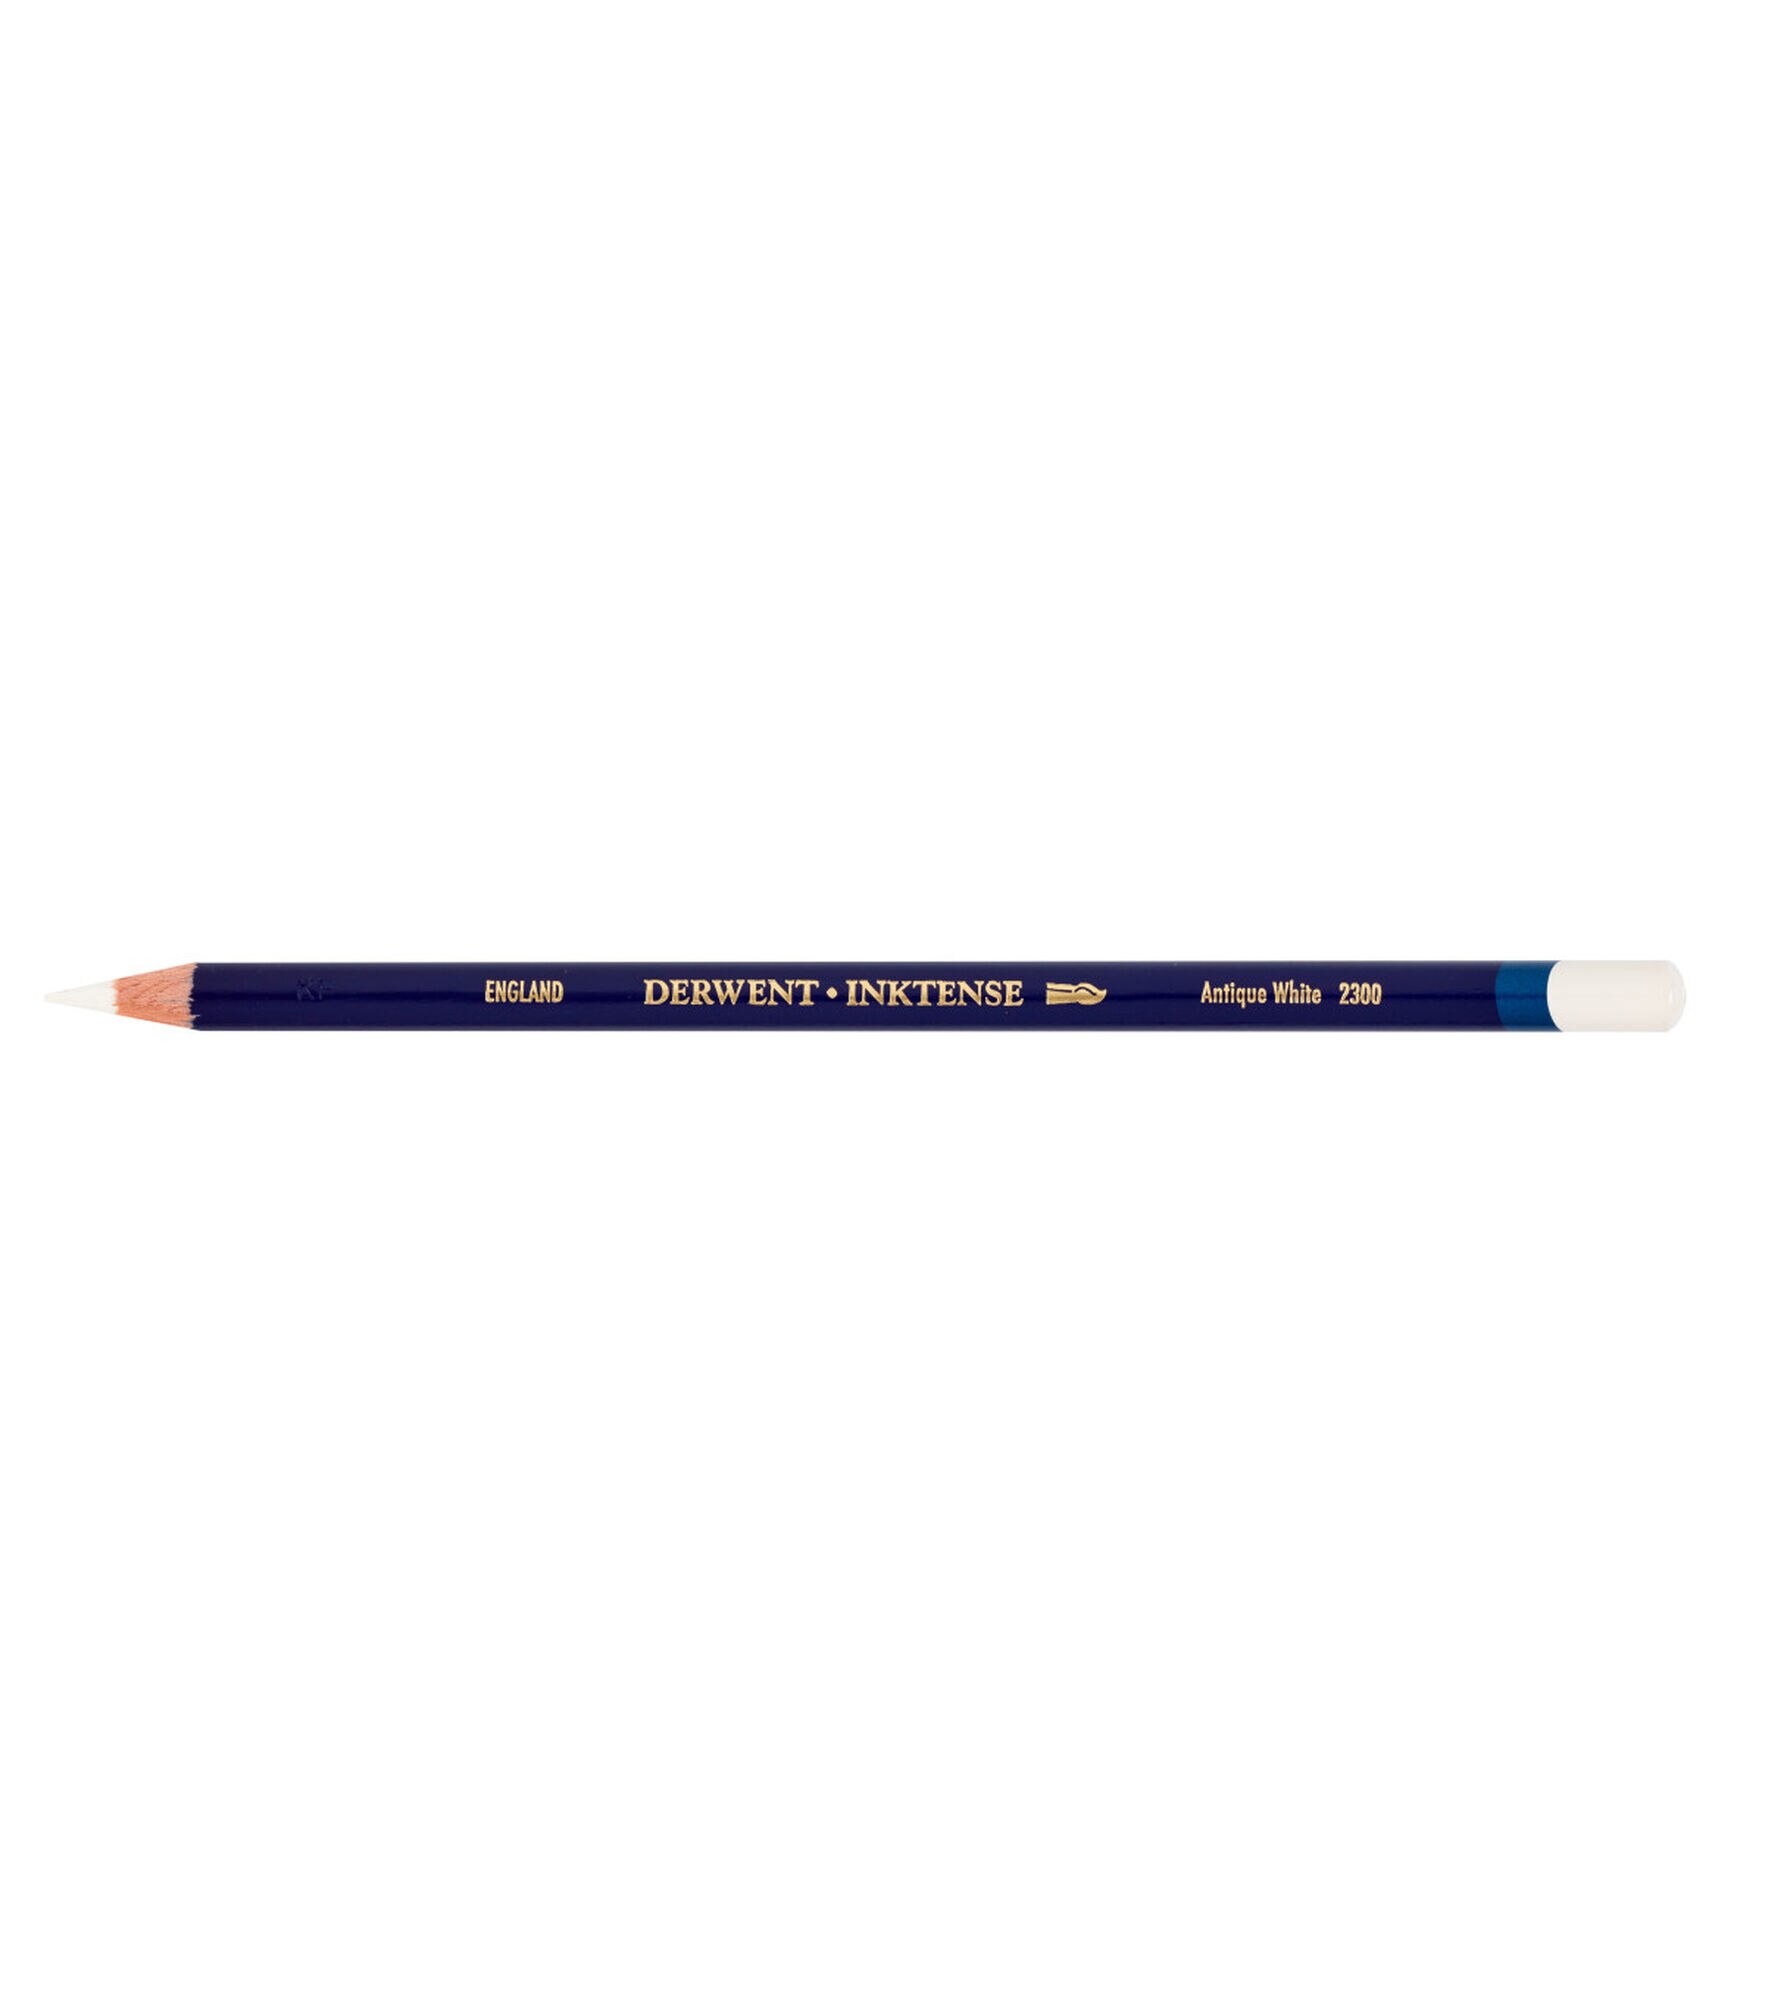 Product Review: Derwent Inktense Pencils